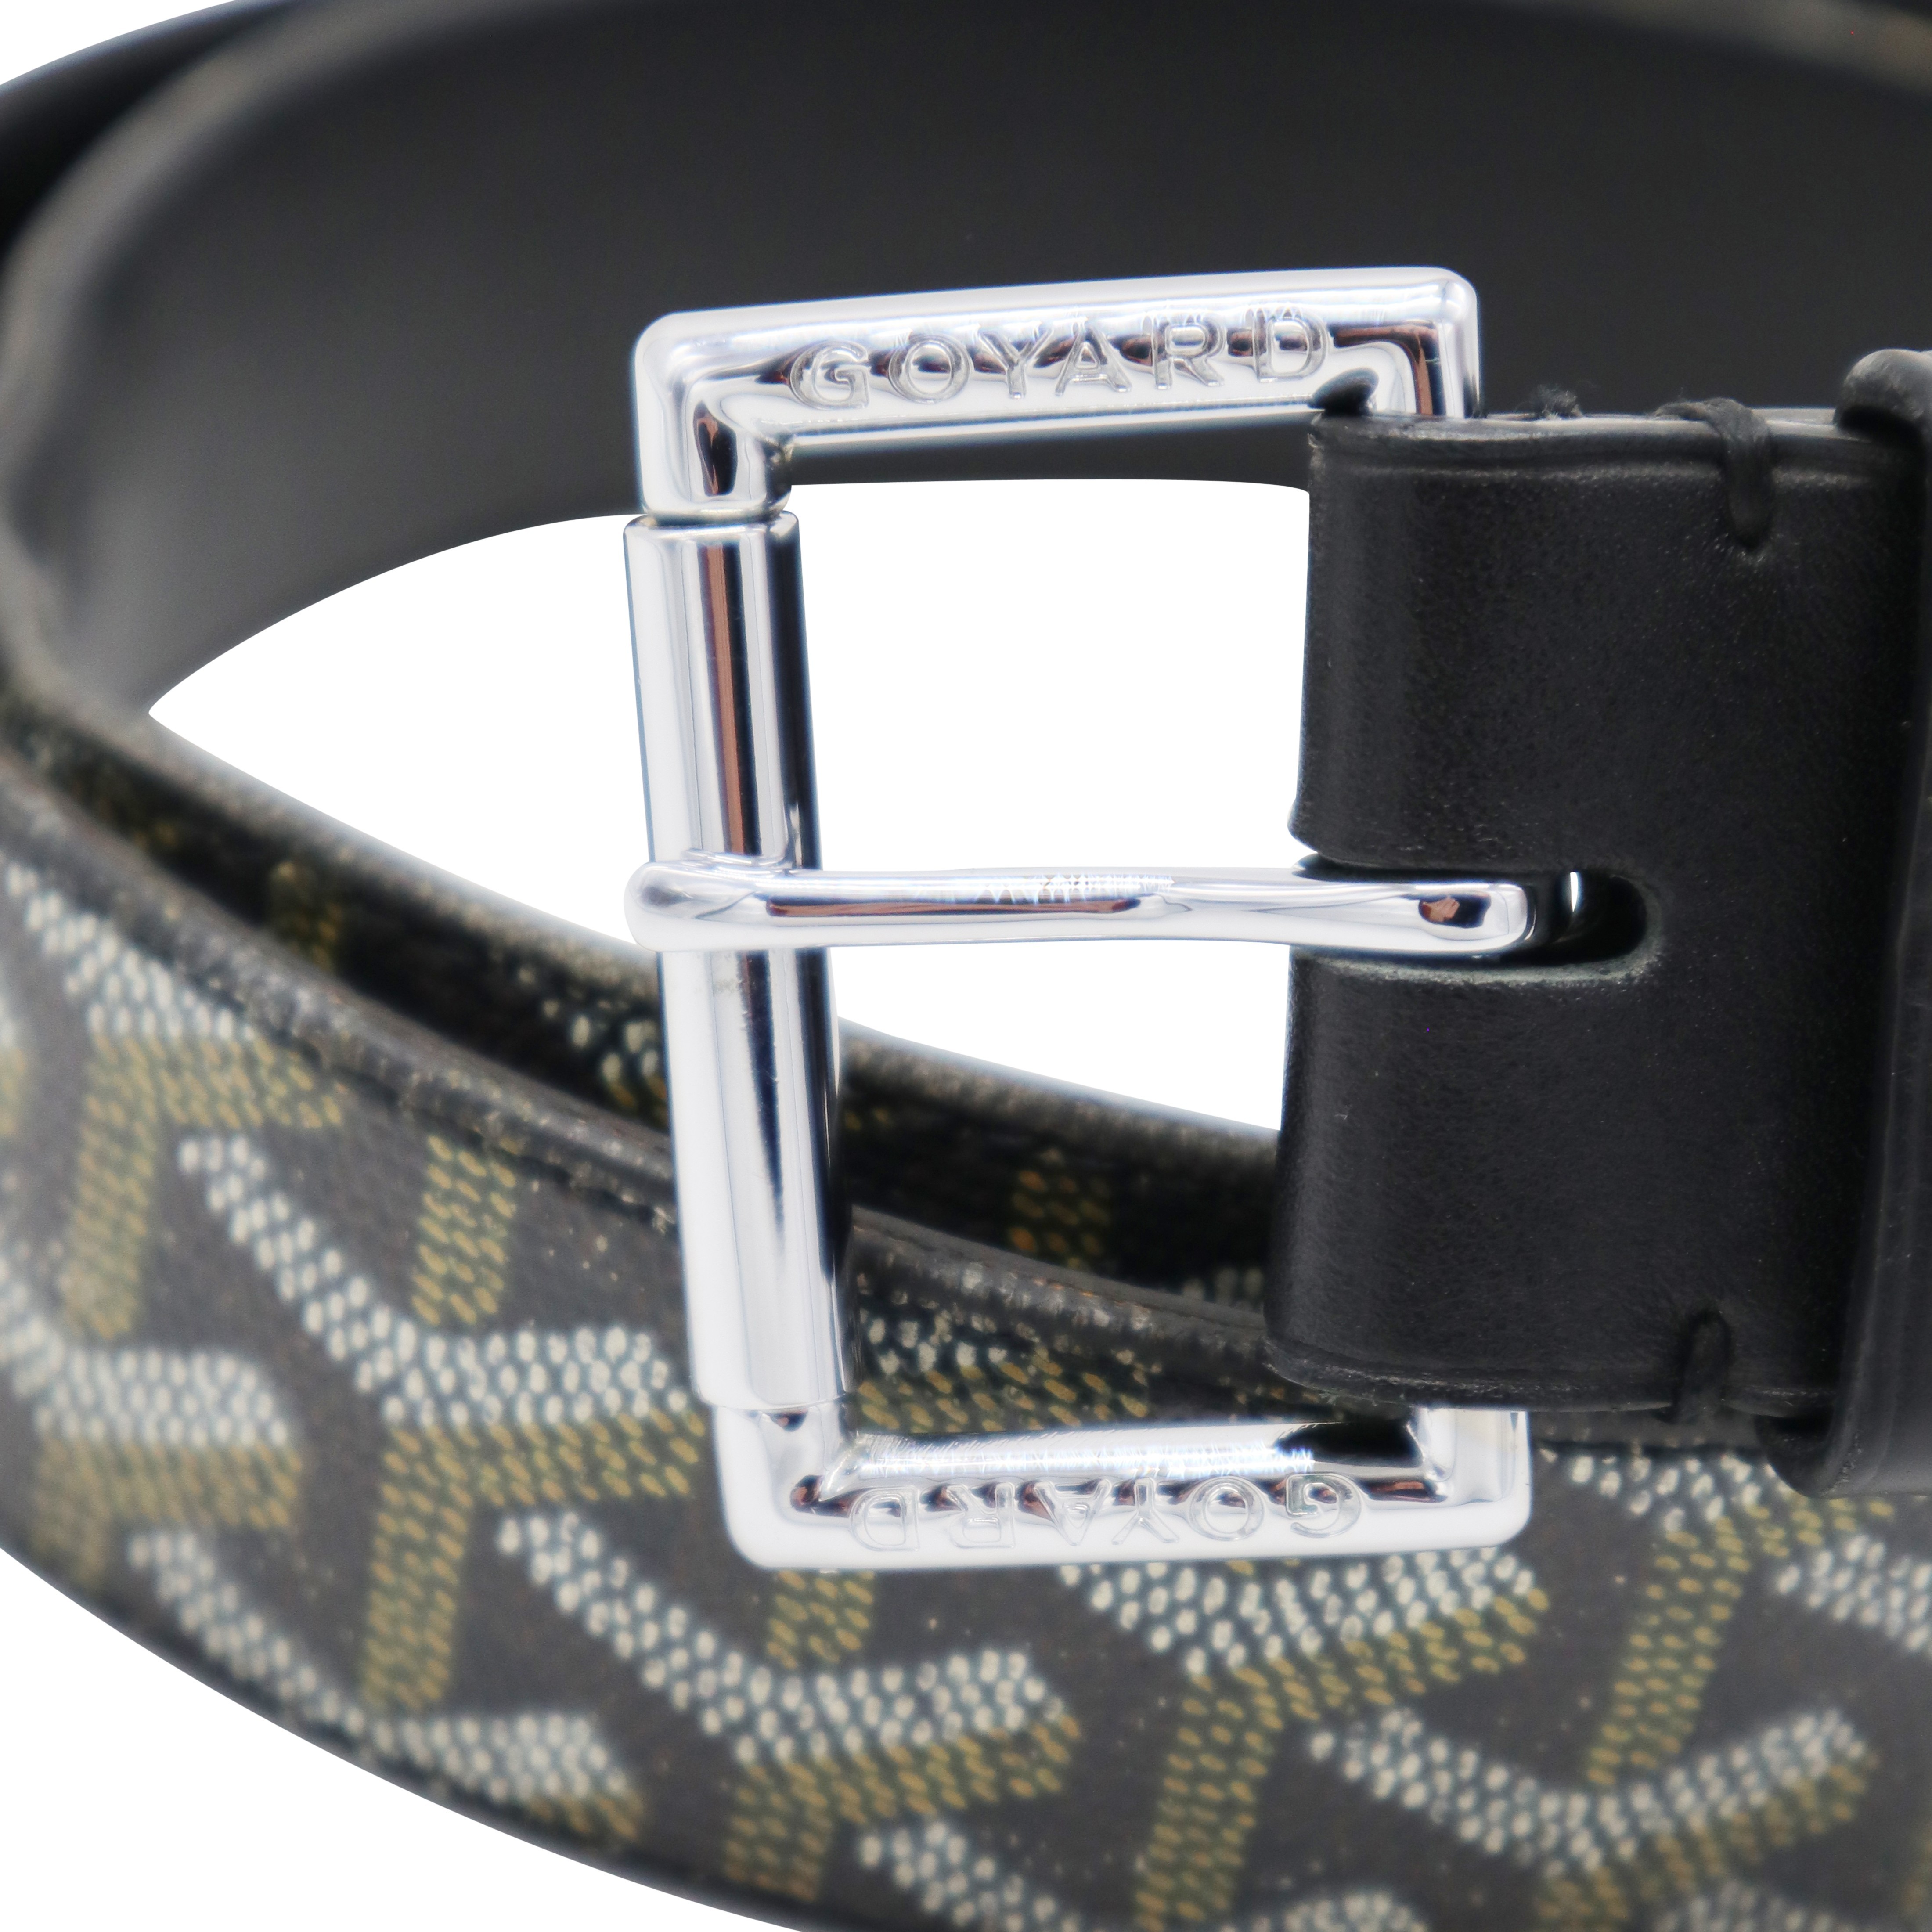 Goyard Goyardine Florida Belt - Black Belts, Accessories